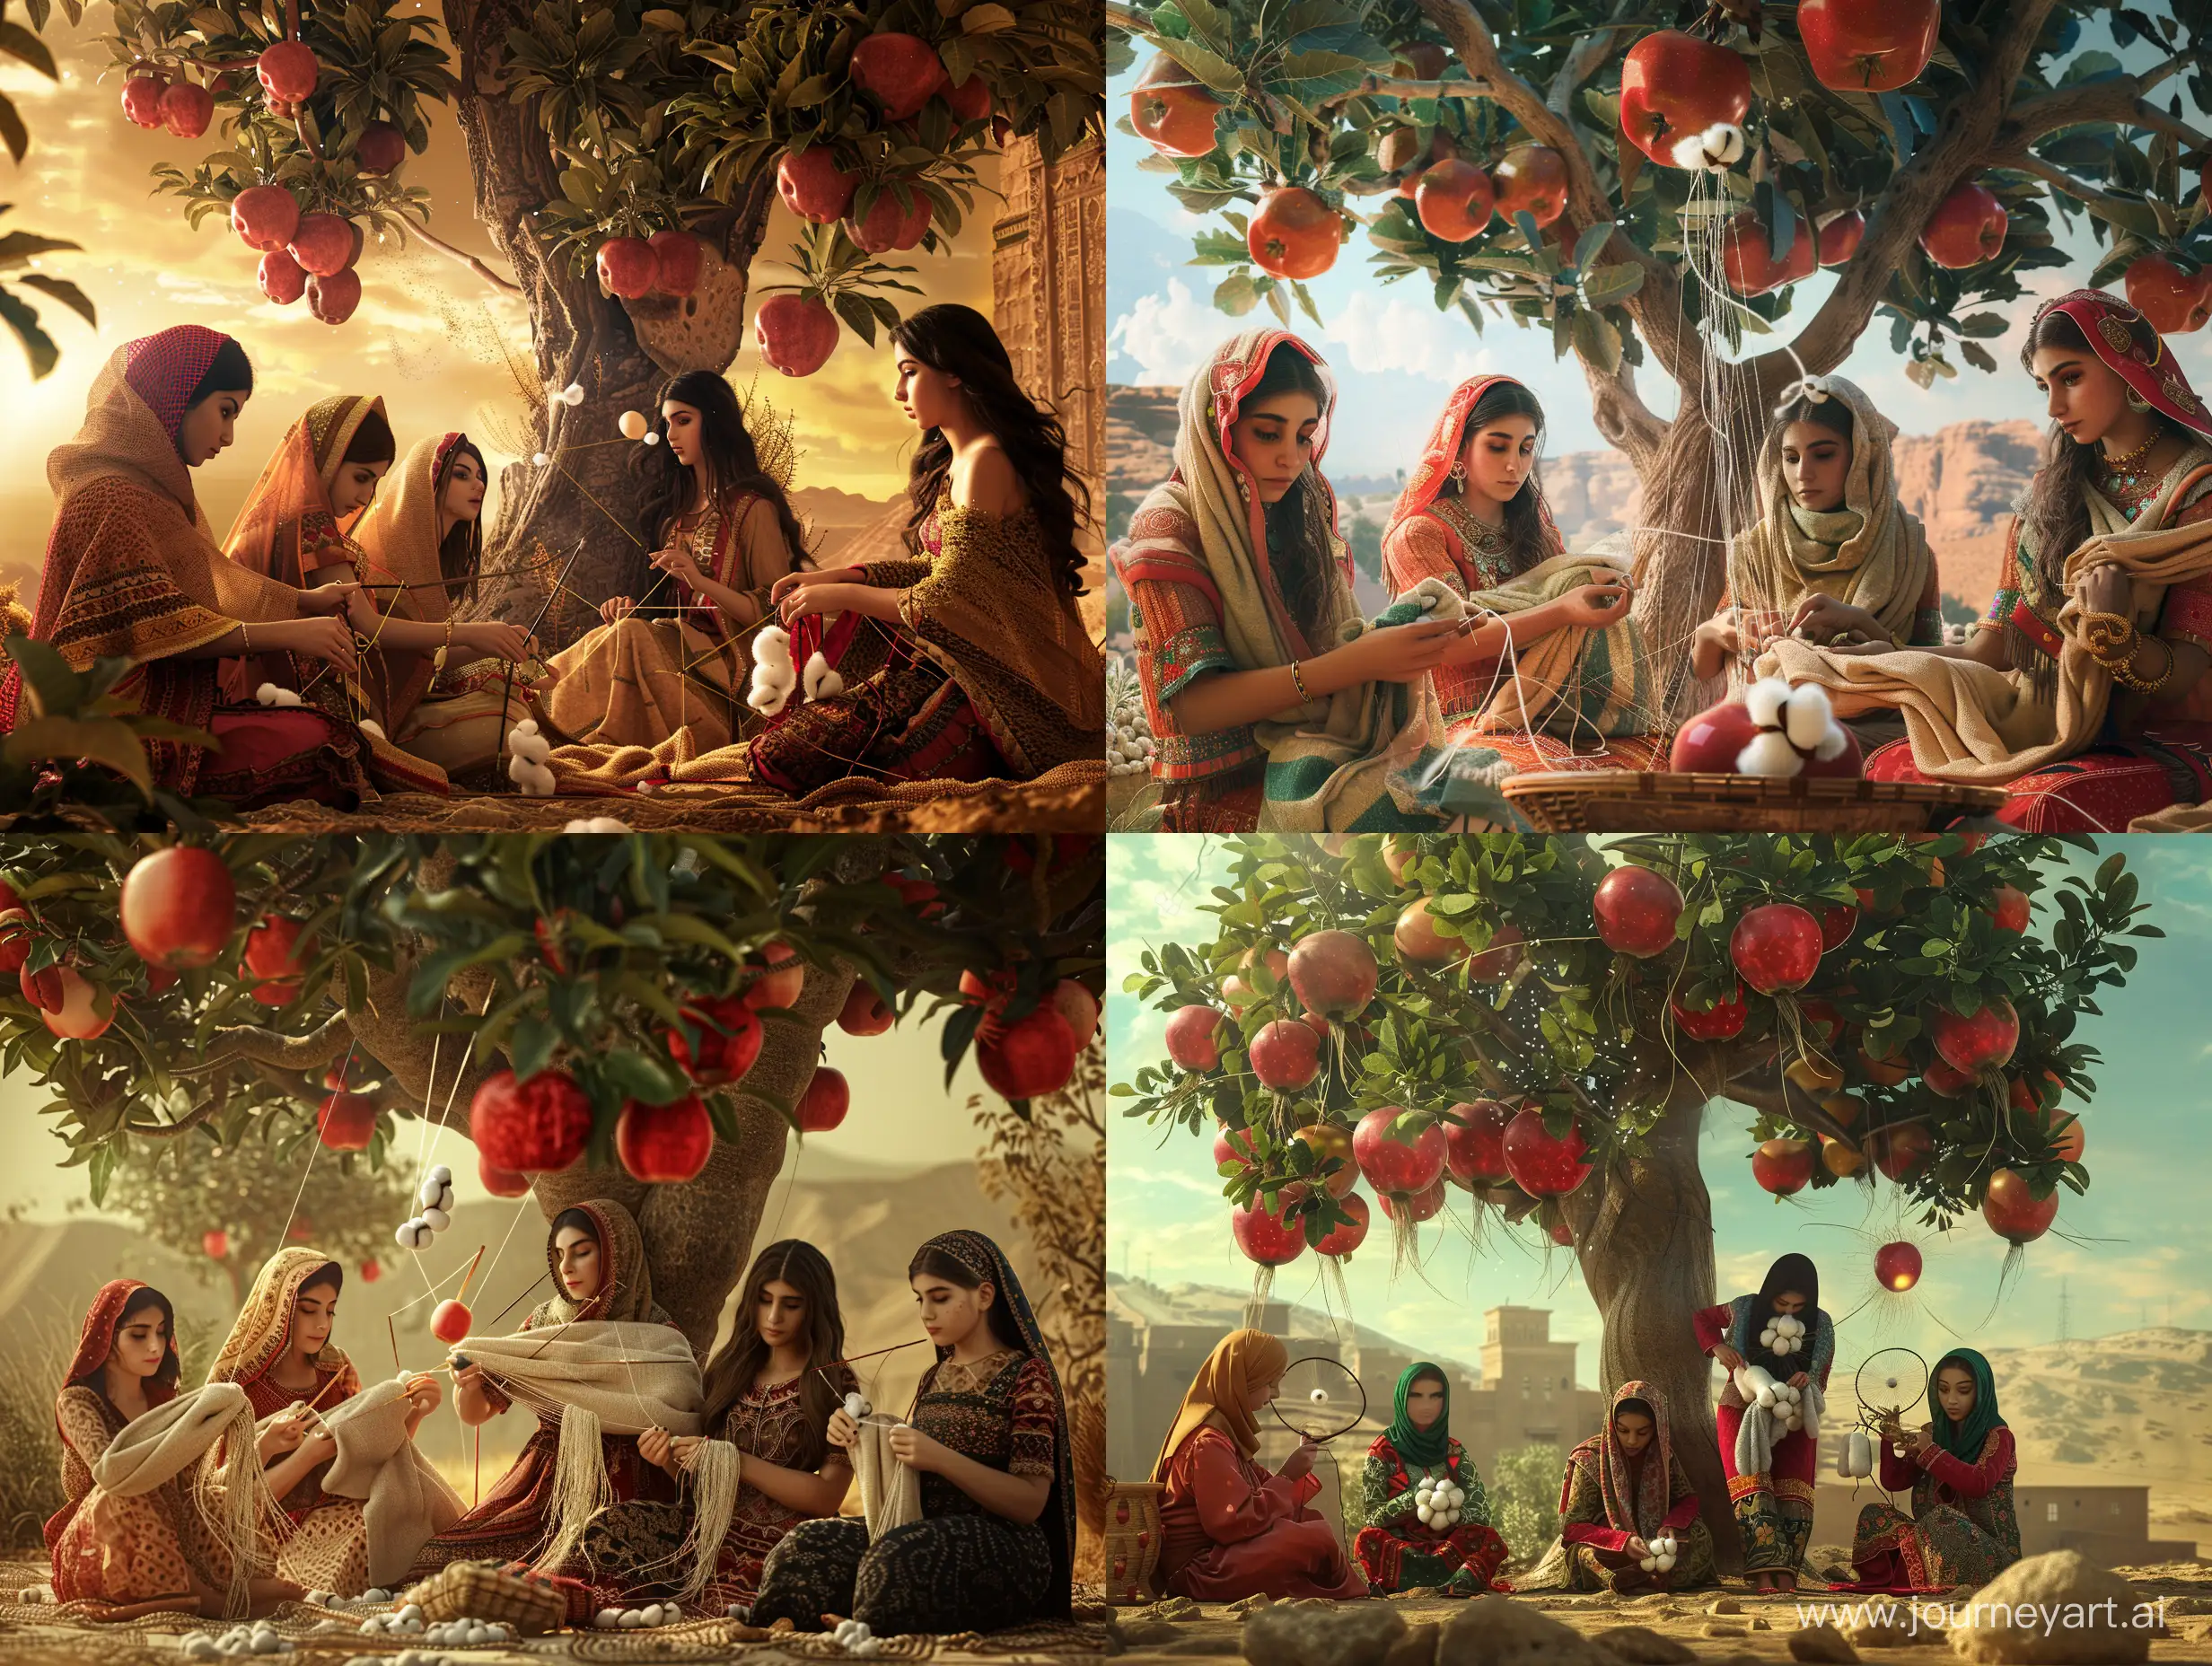 Persian-Women-Knitting-Shawls-Under-Giant-Apple-Tree-in-Ancient-Desert-Civilization